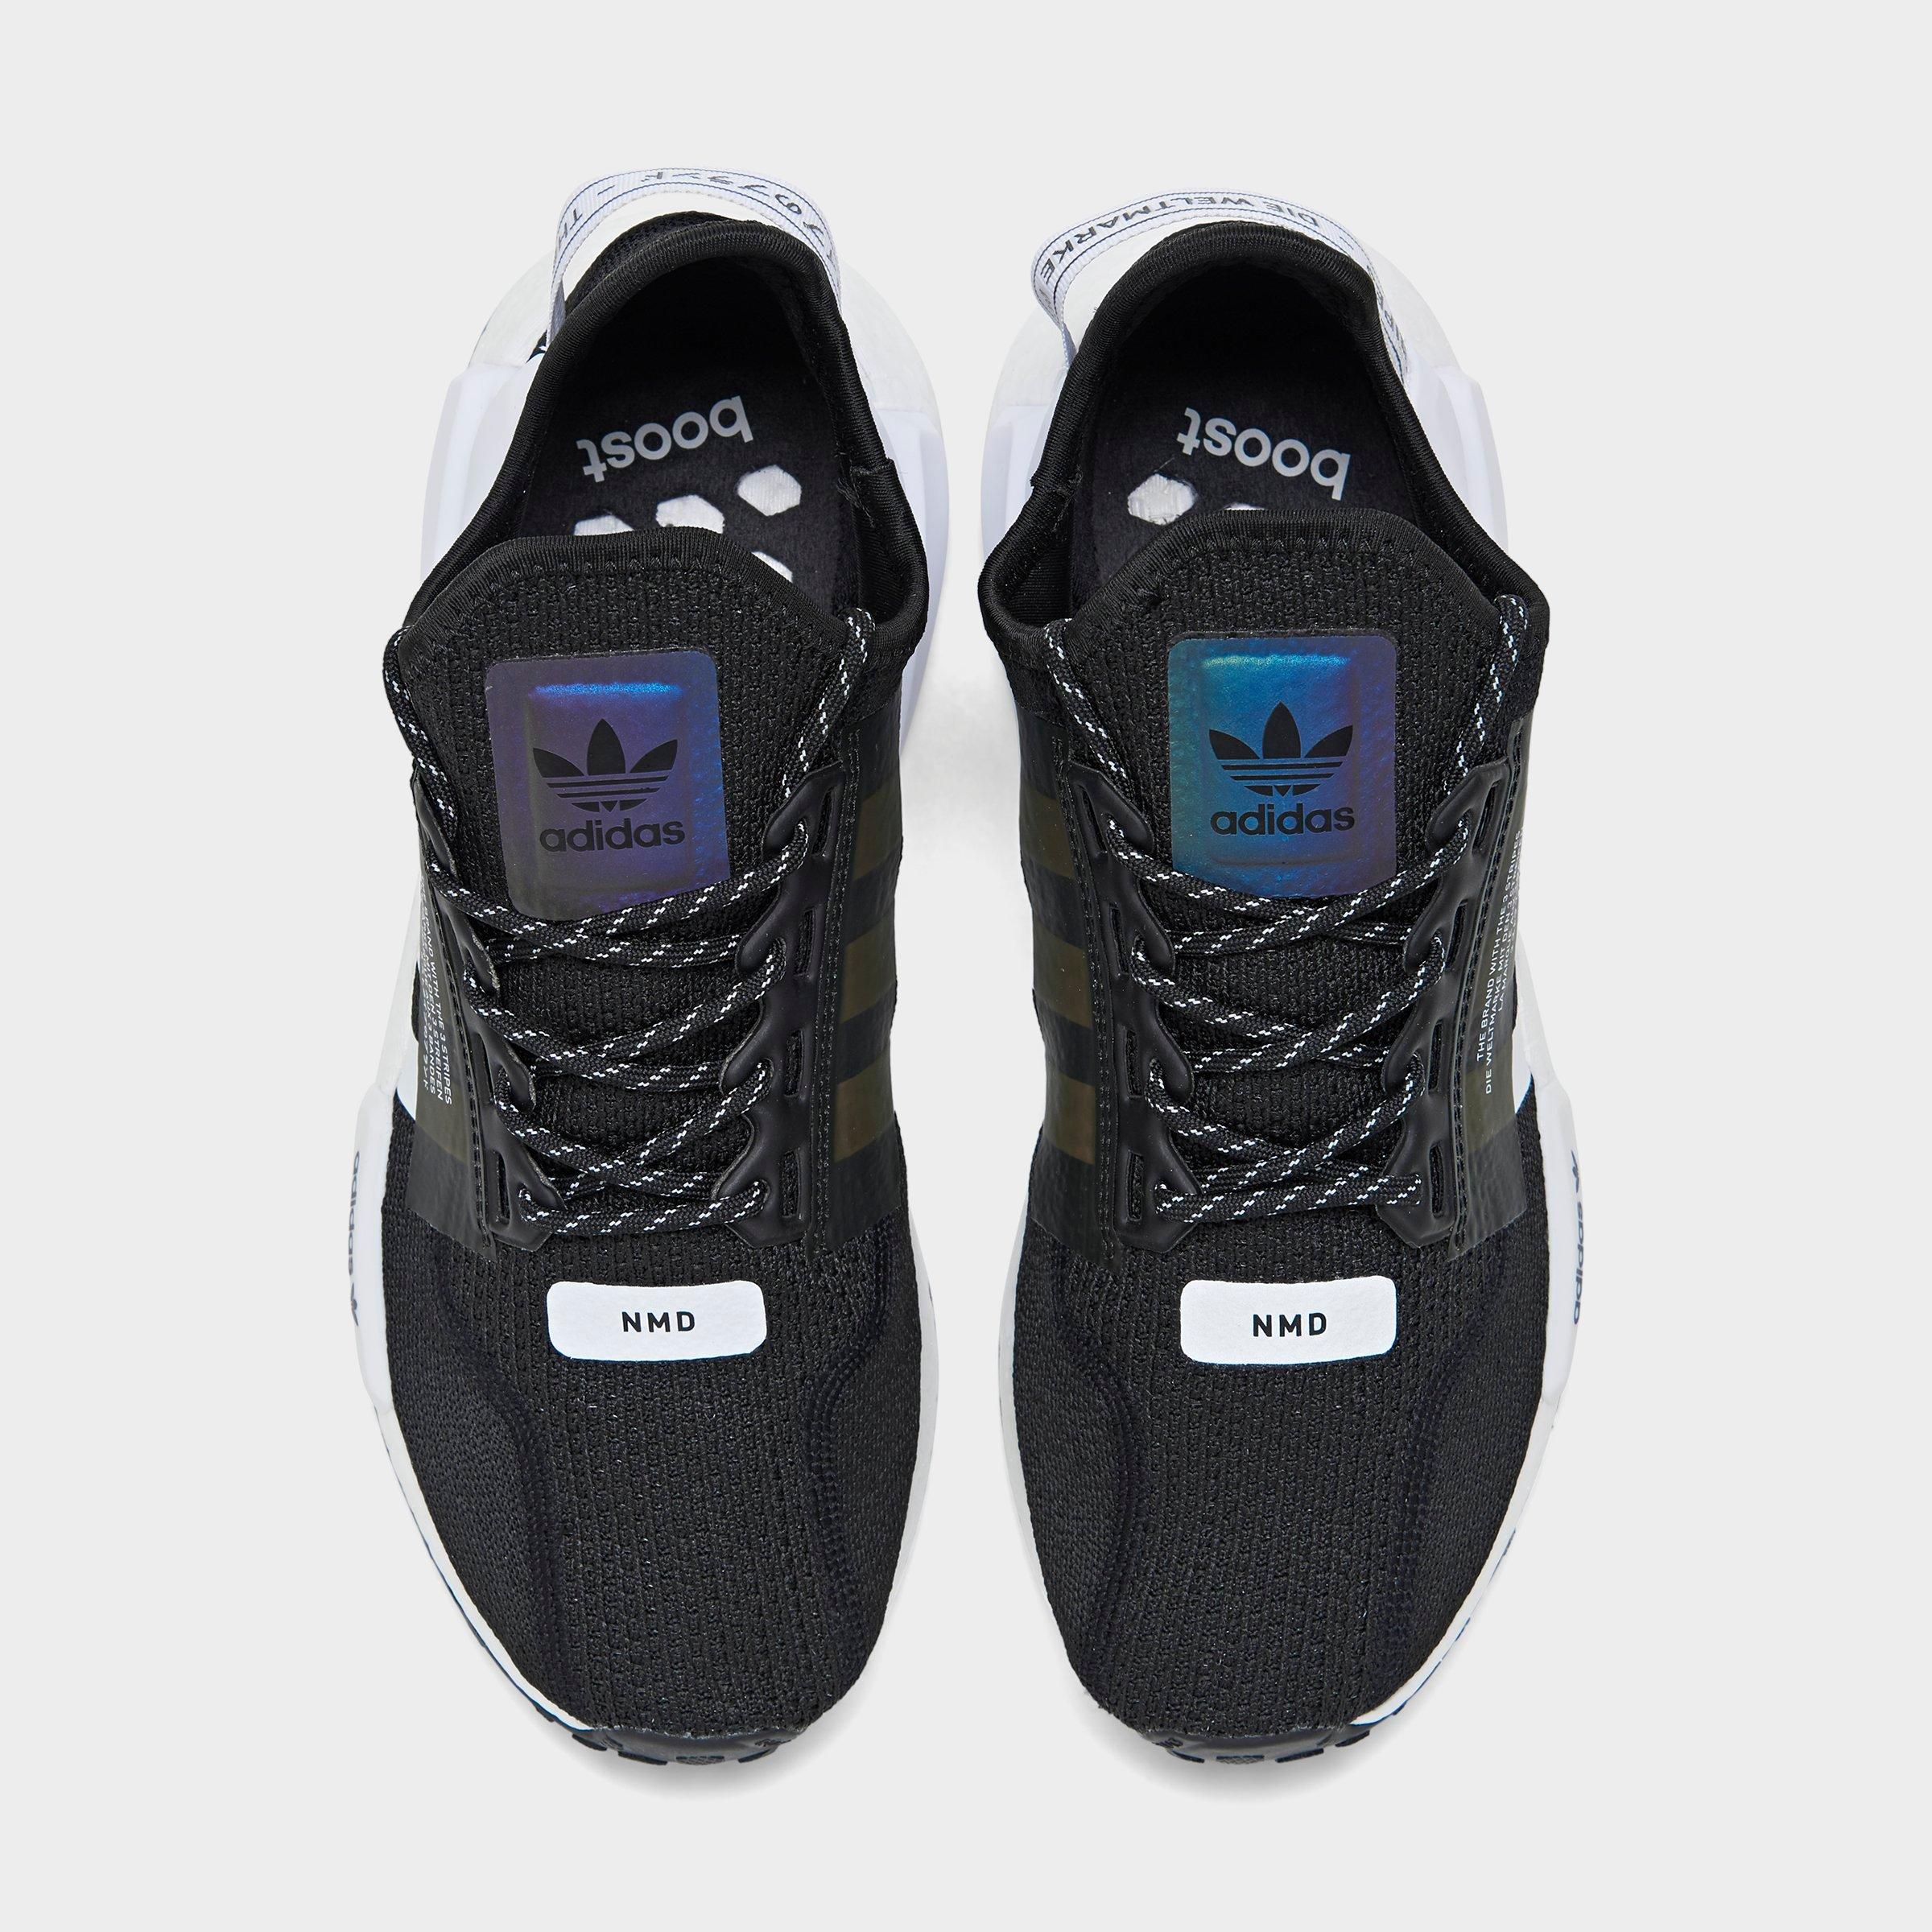 Adidas Mens NMD R1 V2 Casual Shoes Black Core Black Carbon